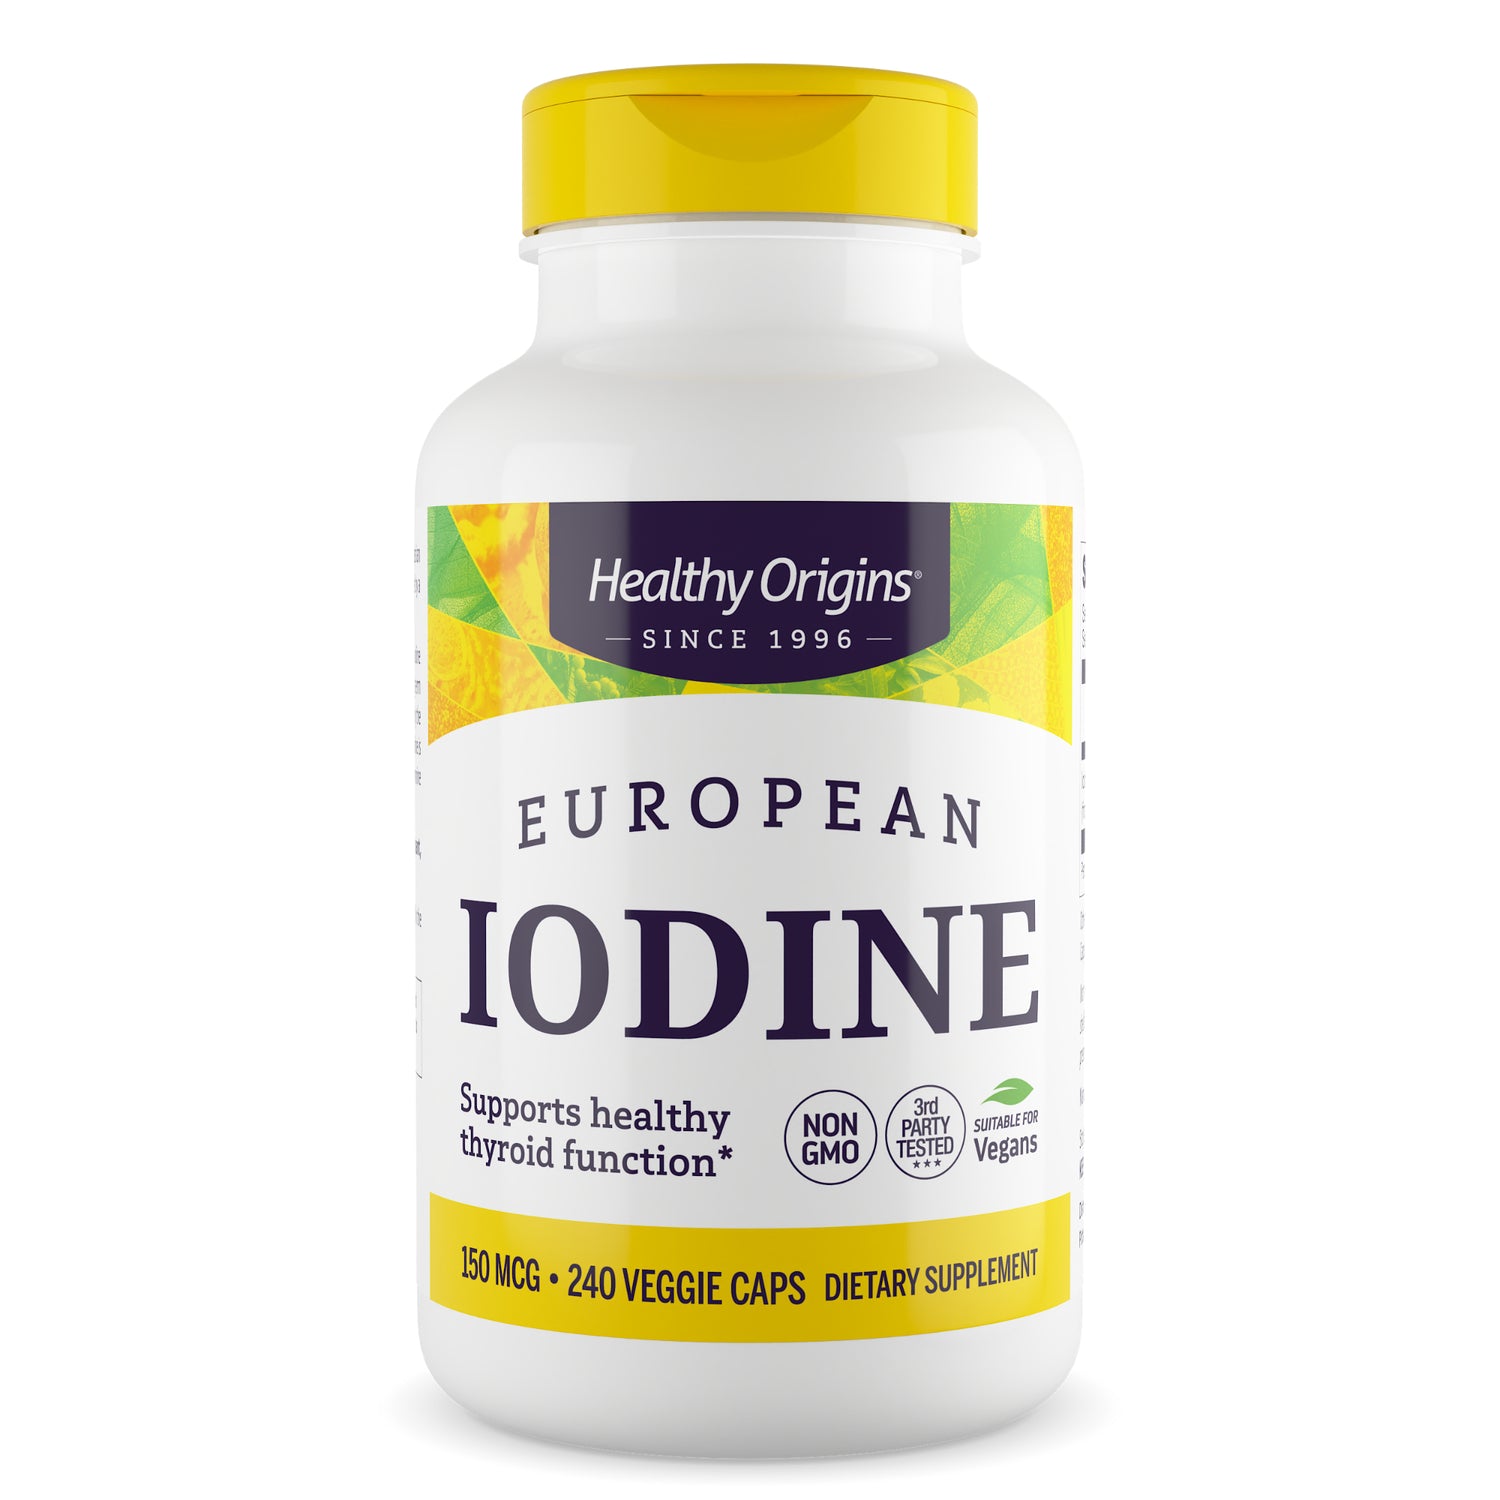 European Iodine